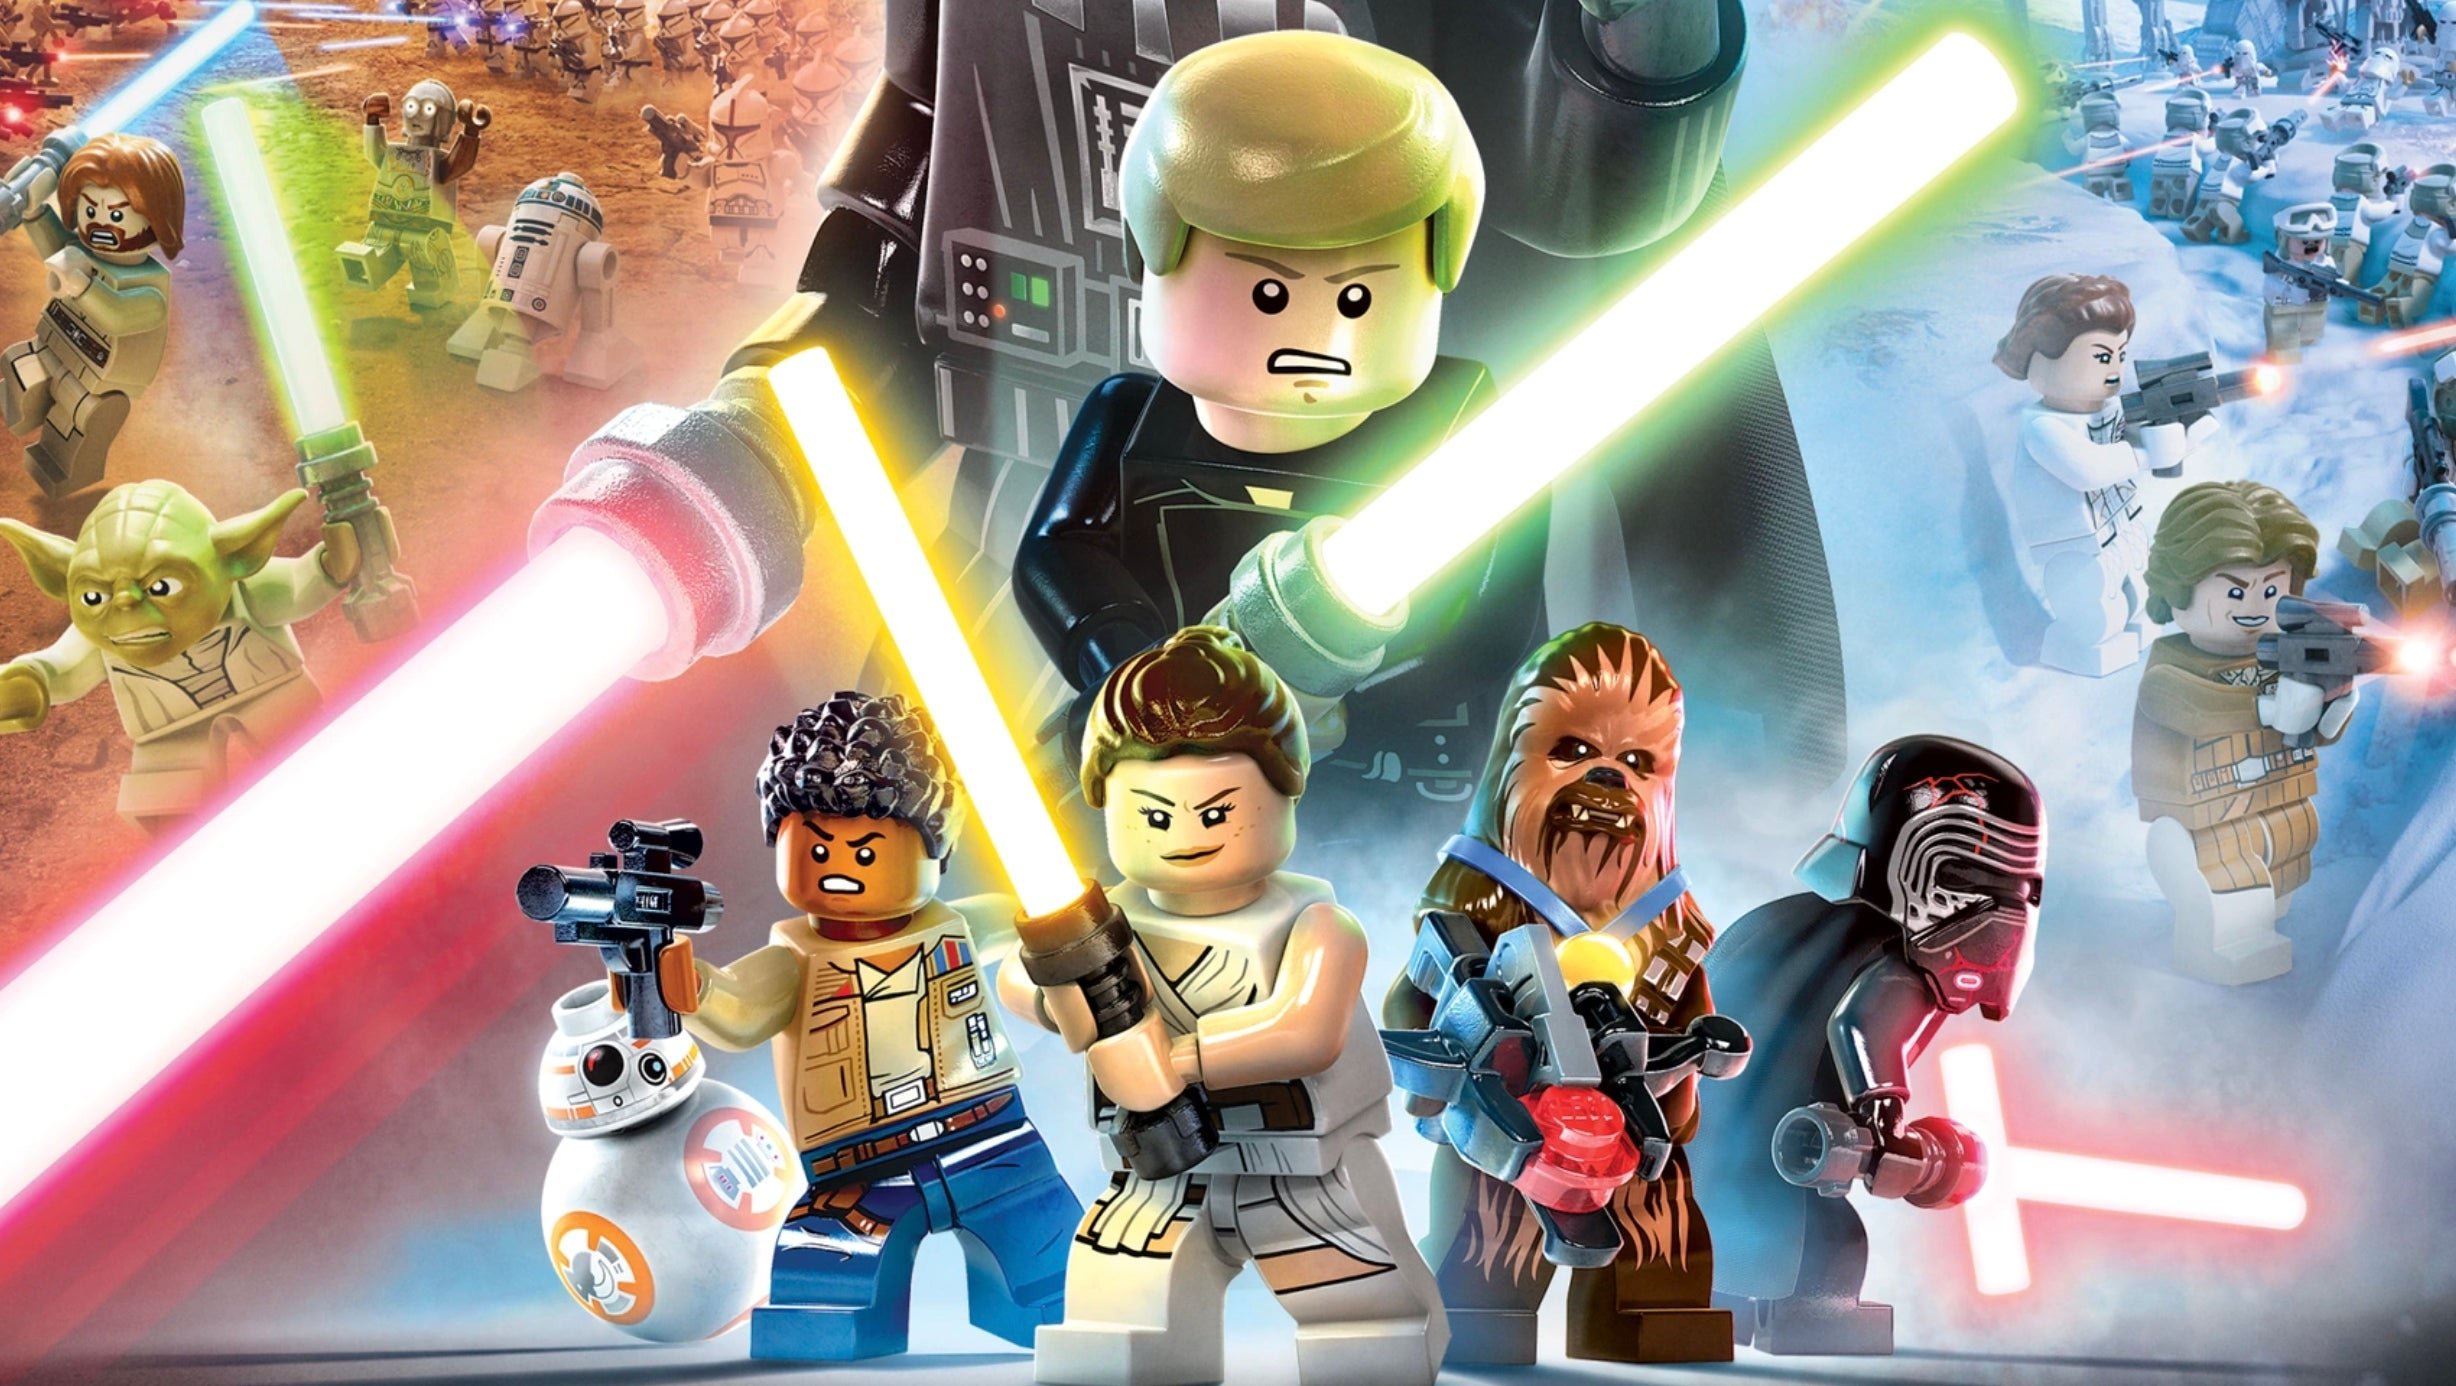 The cover of LEGO Star Wars: The Skywalker Saga